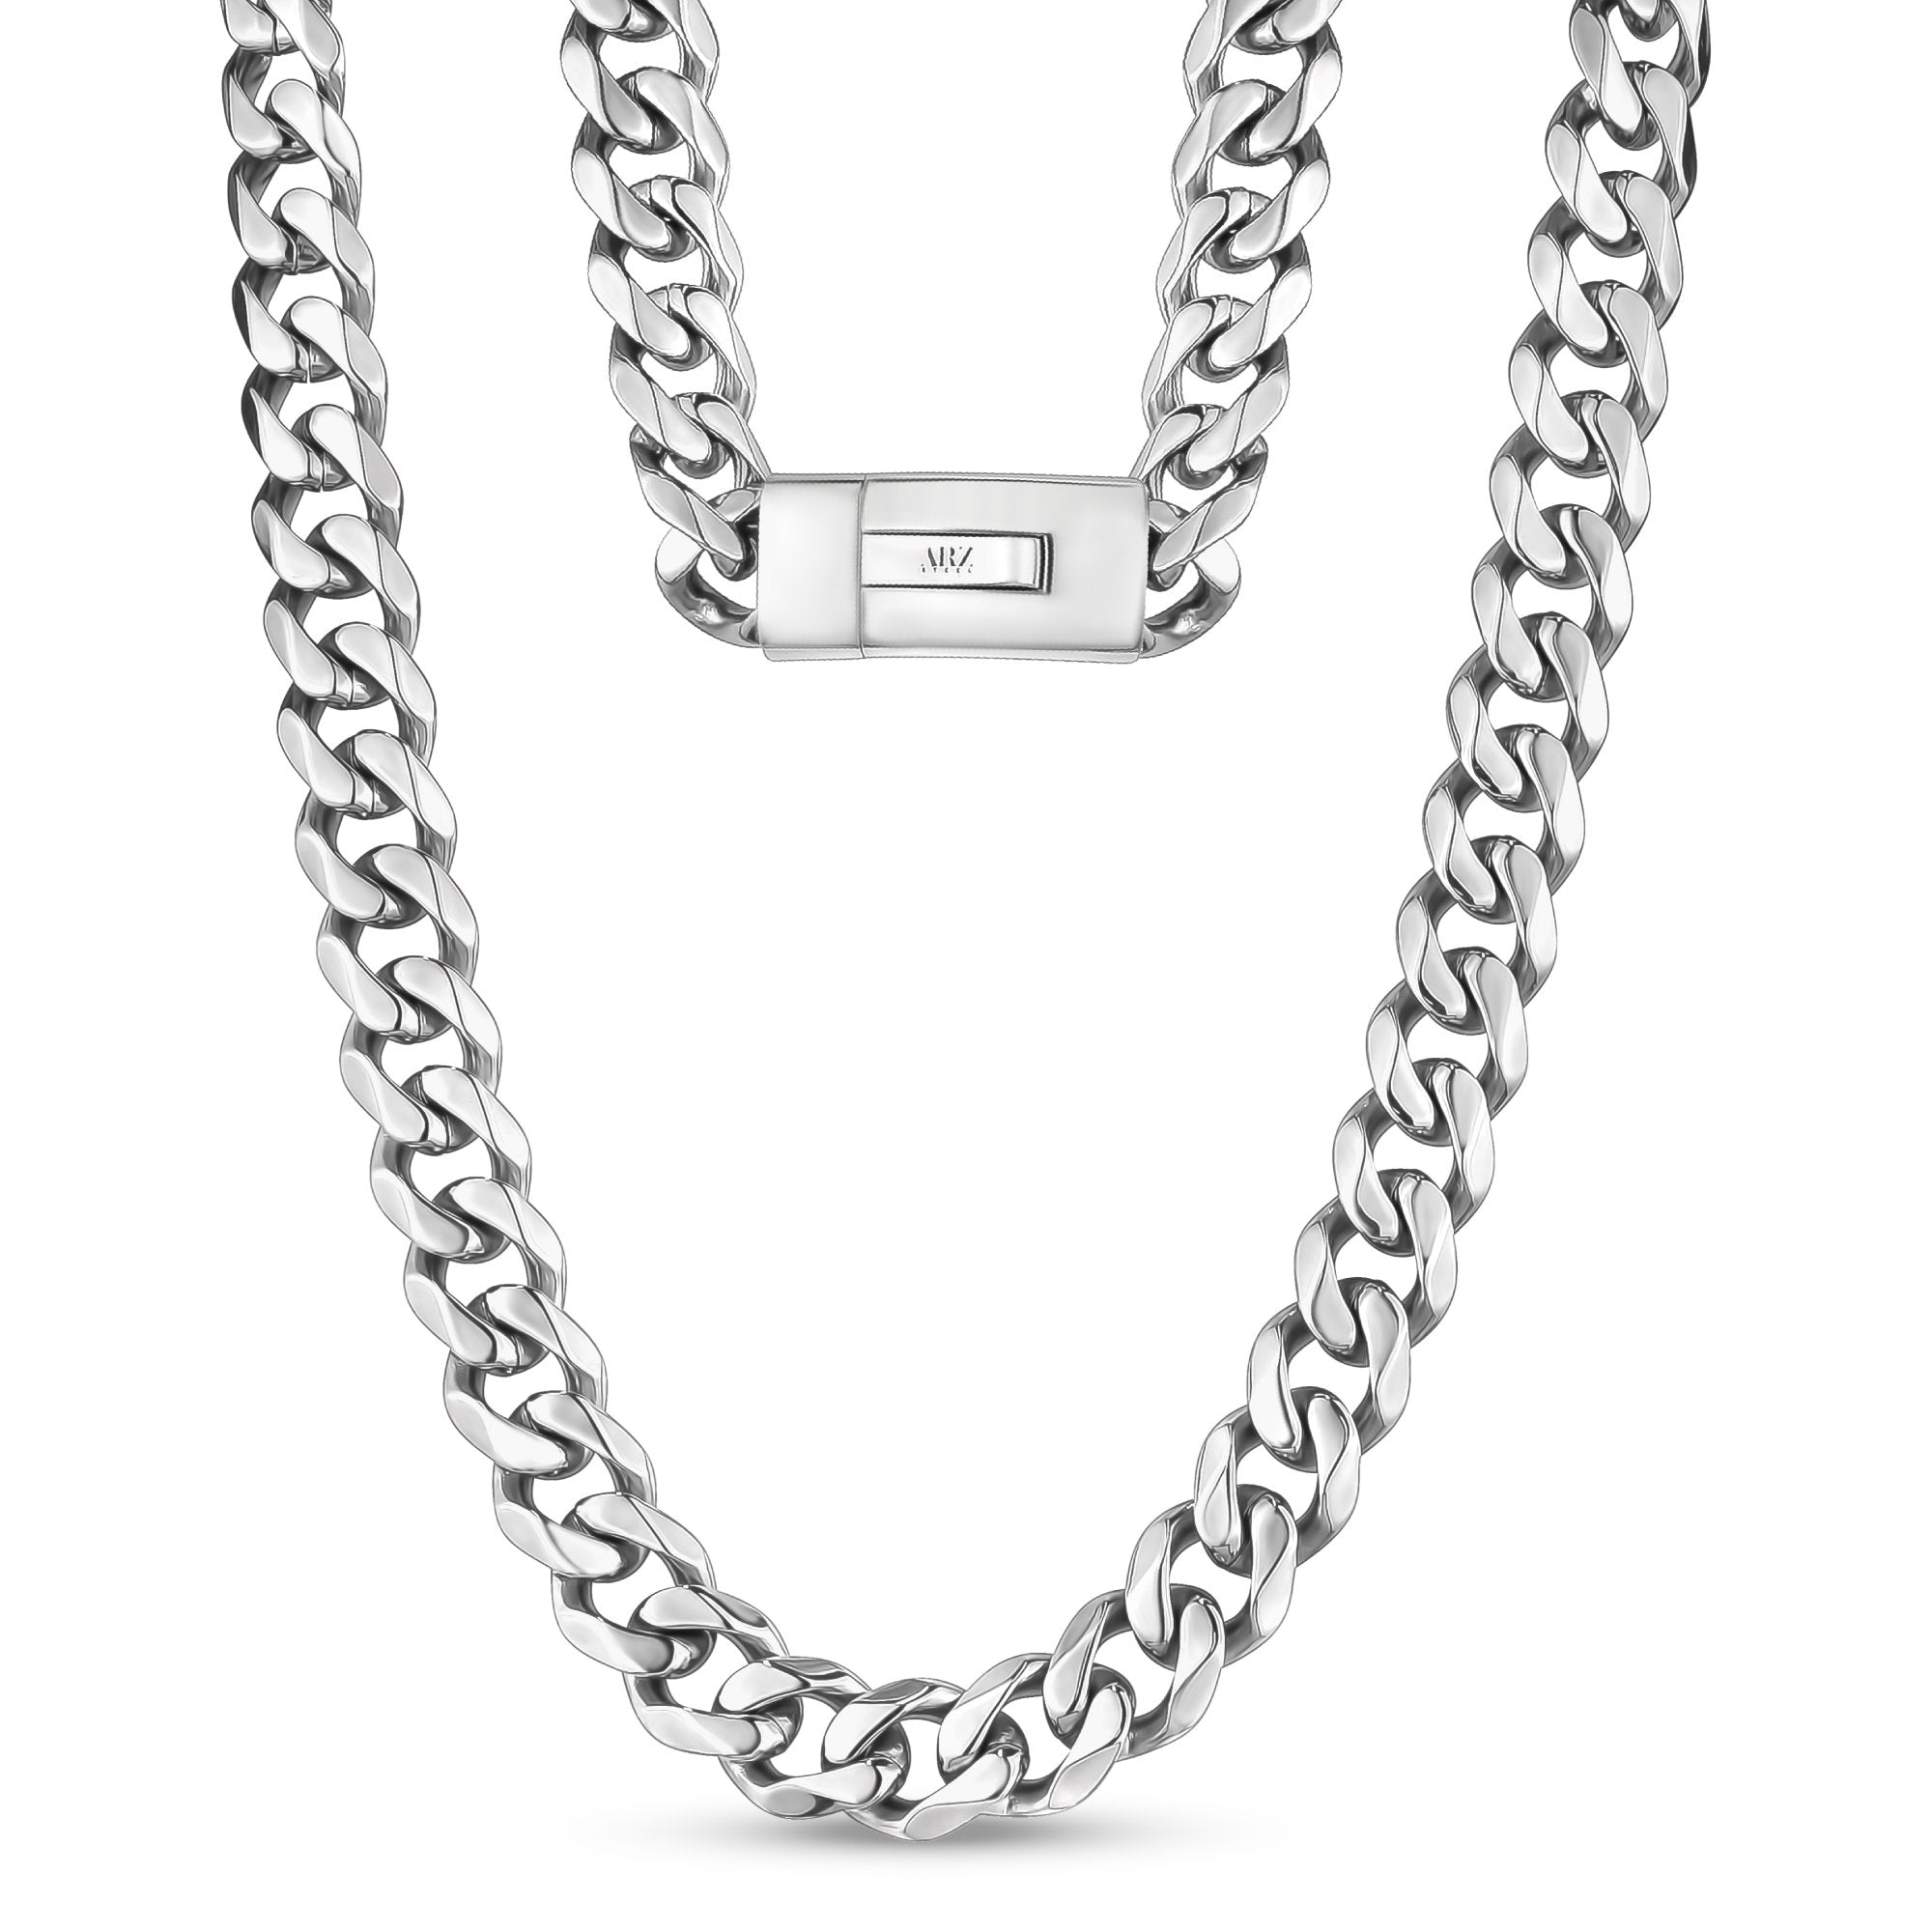 35cm-80cm 0.65mm Thin Real 925 Sterling Silver Slim Box Chain Necklace  Women Girls Kids Children Jewelry Kolye Collares Collier - AliExpress